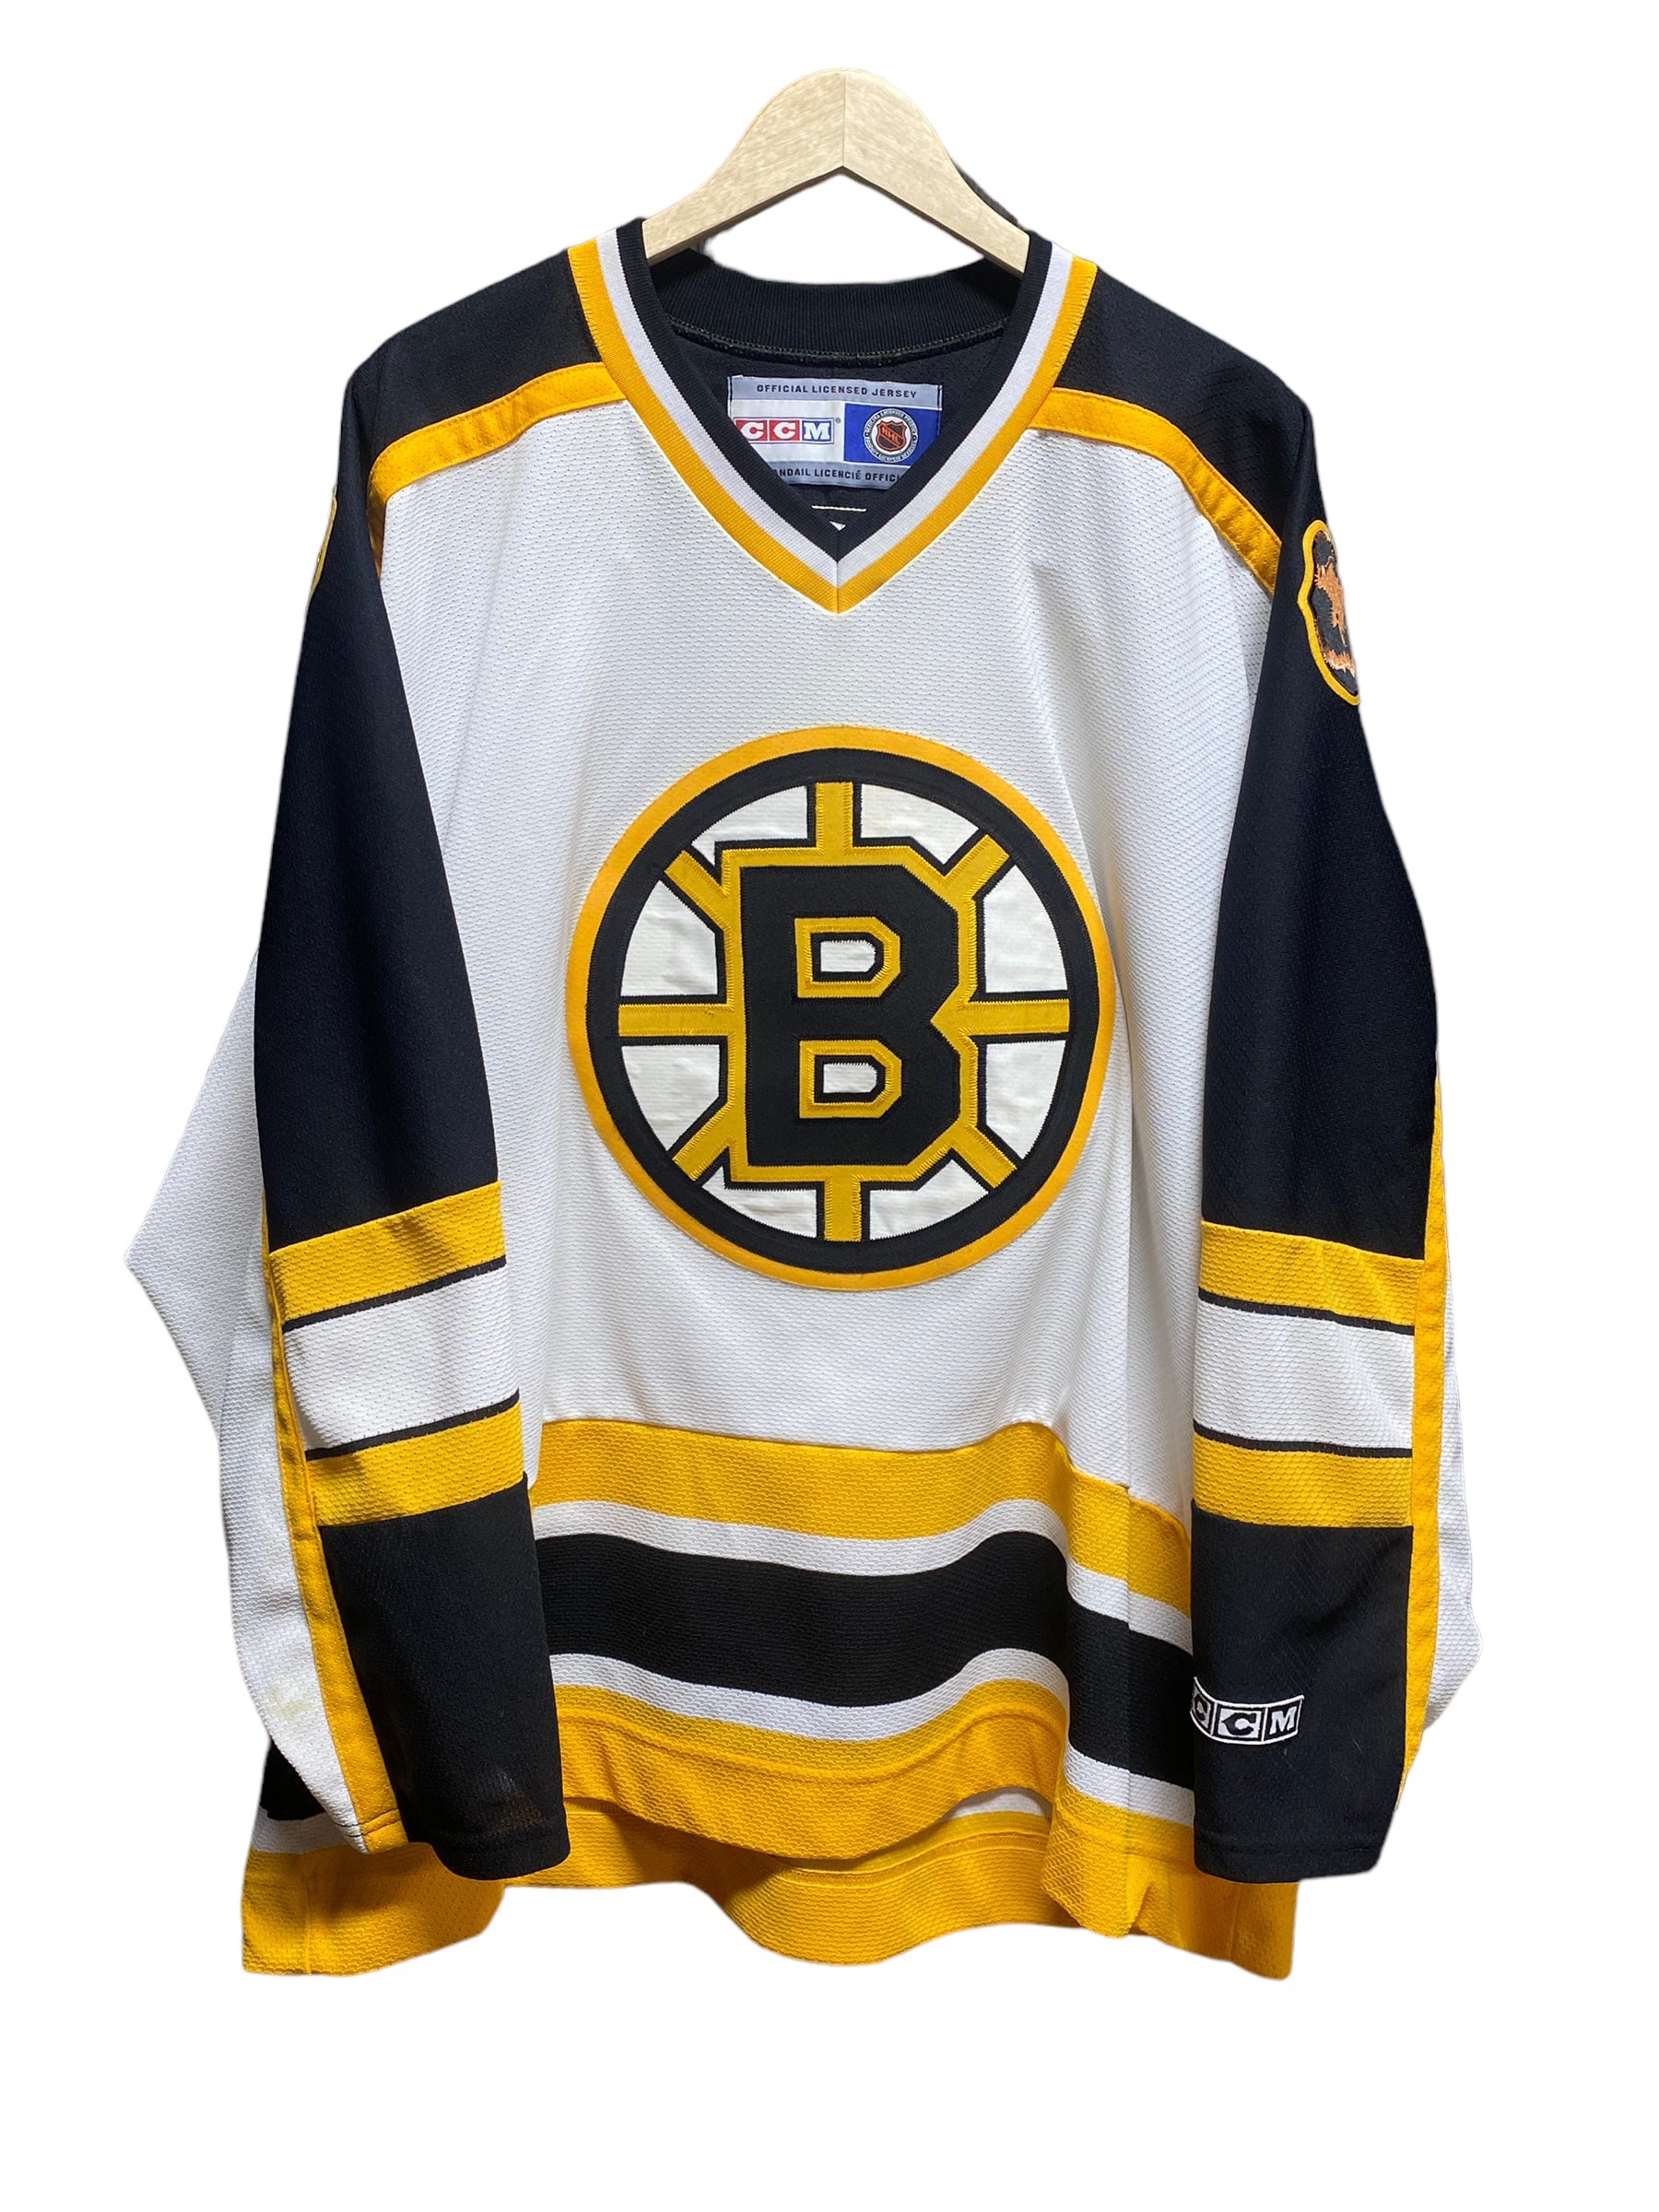 CAM NEELY  Boston Bruins 1990 CCM Vintage Home NHL Hockey Jersey